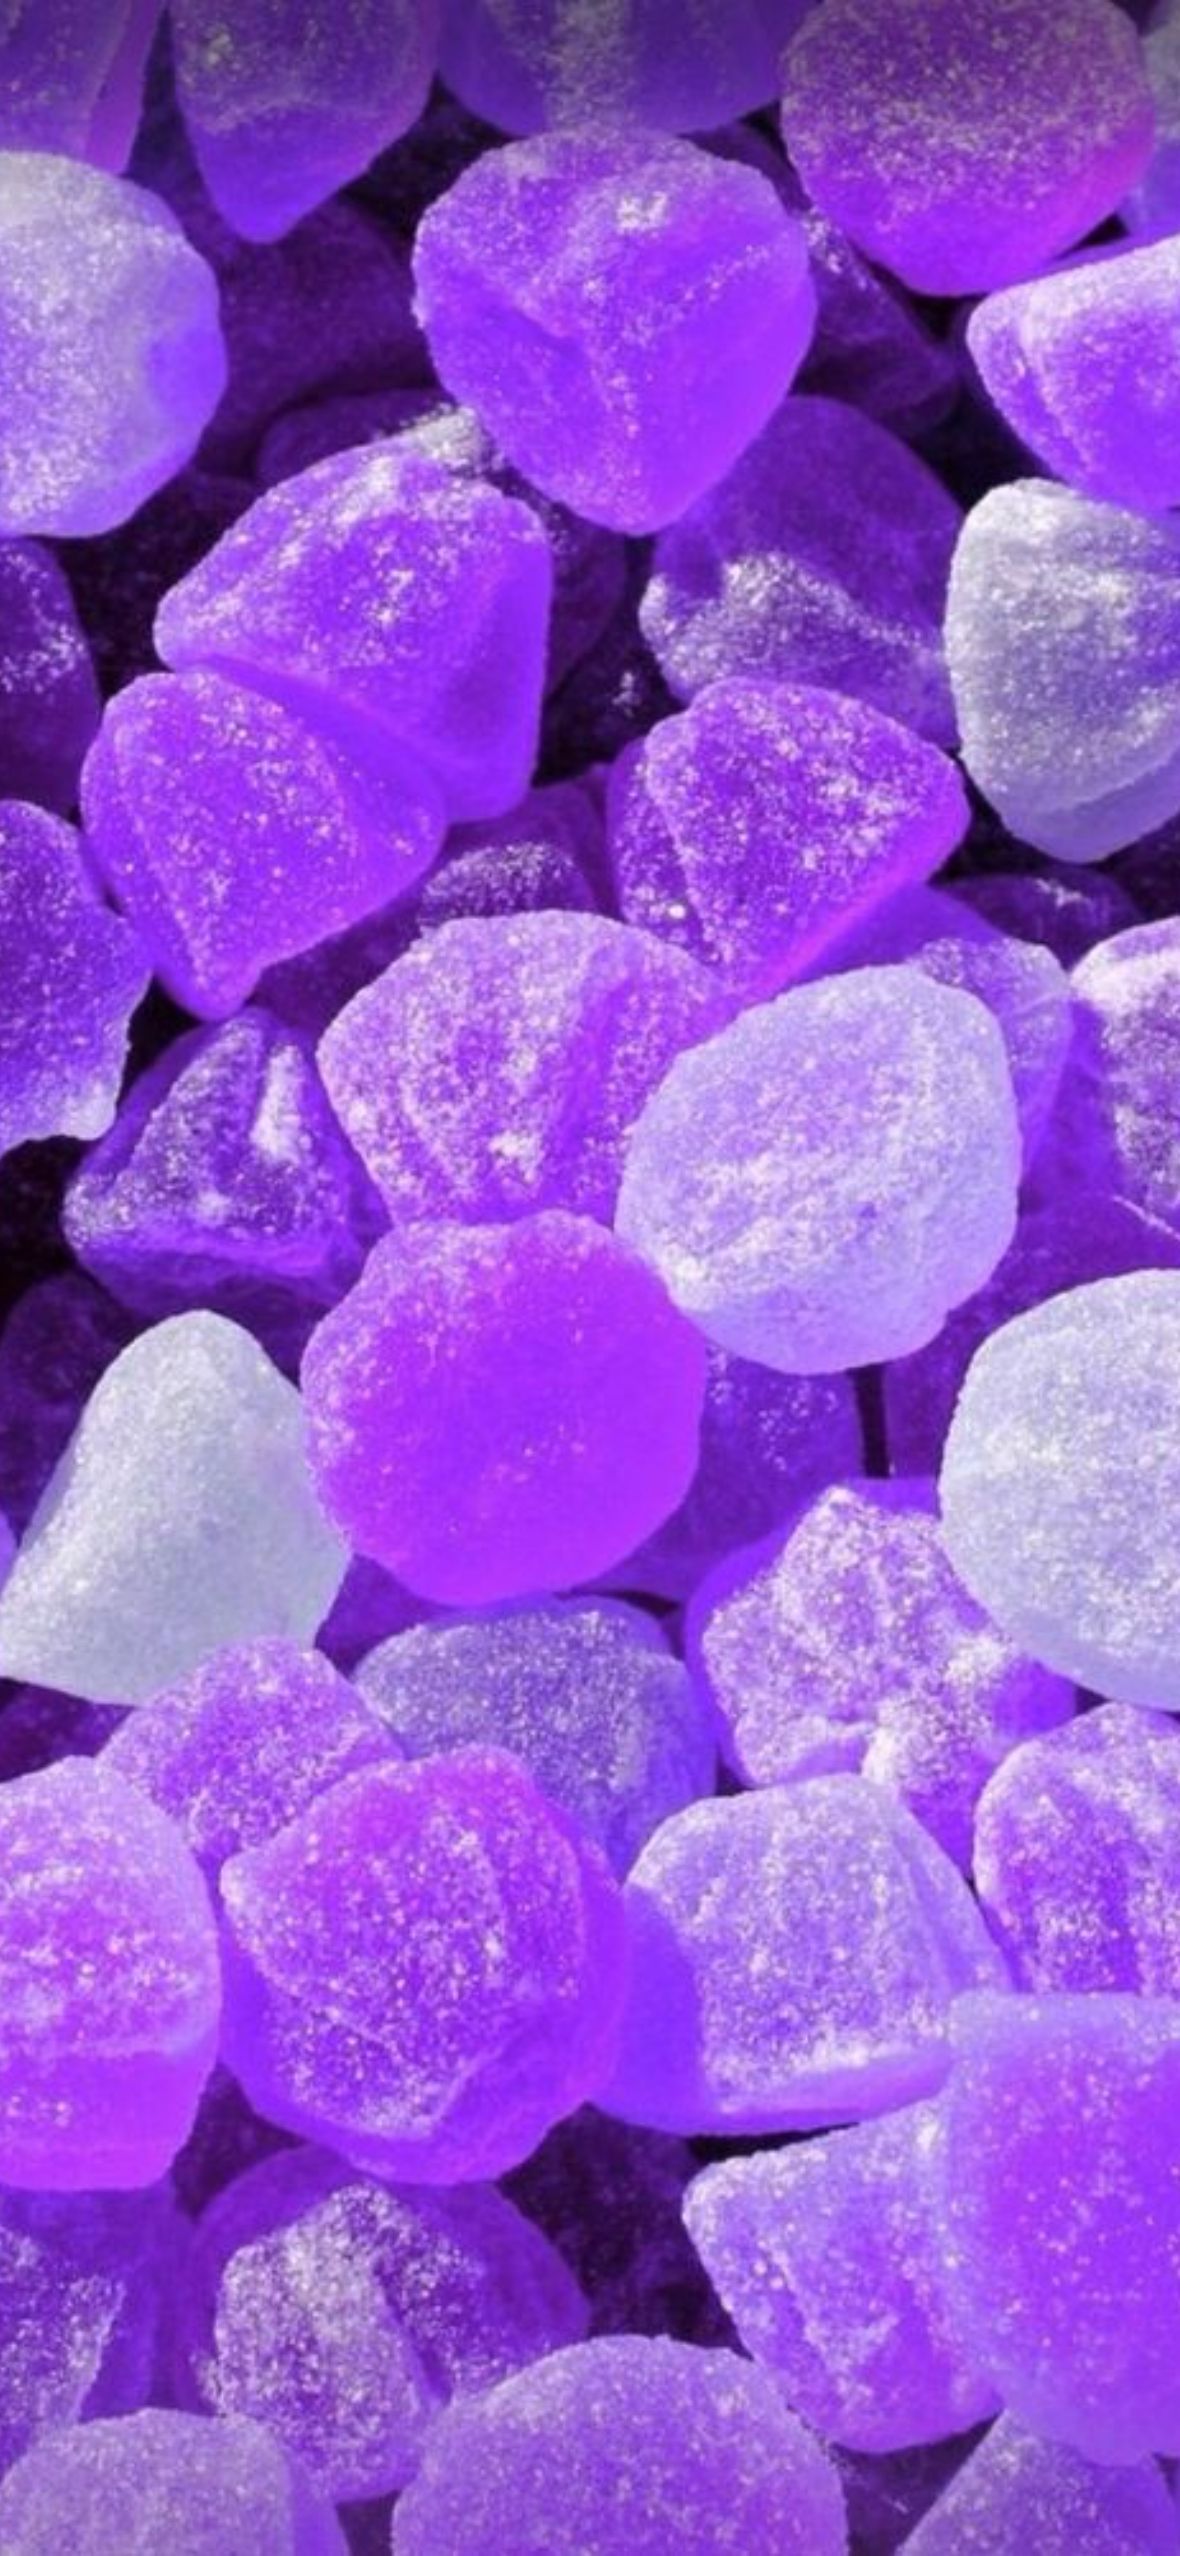 A close up of purple and white rocks - Pastel purple